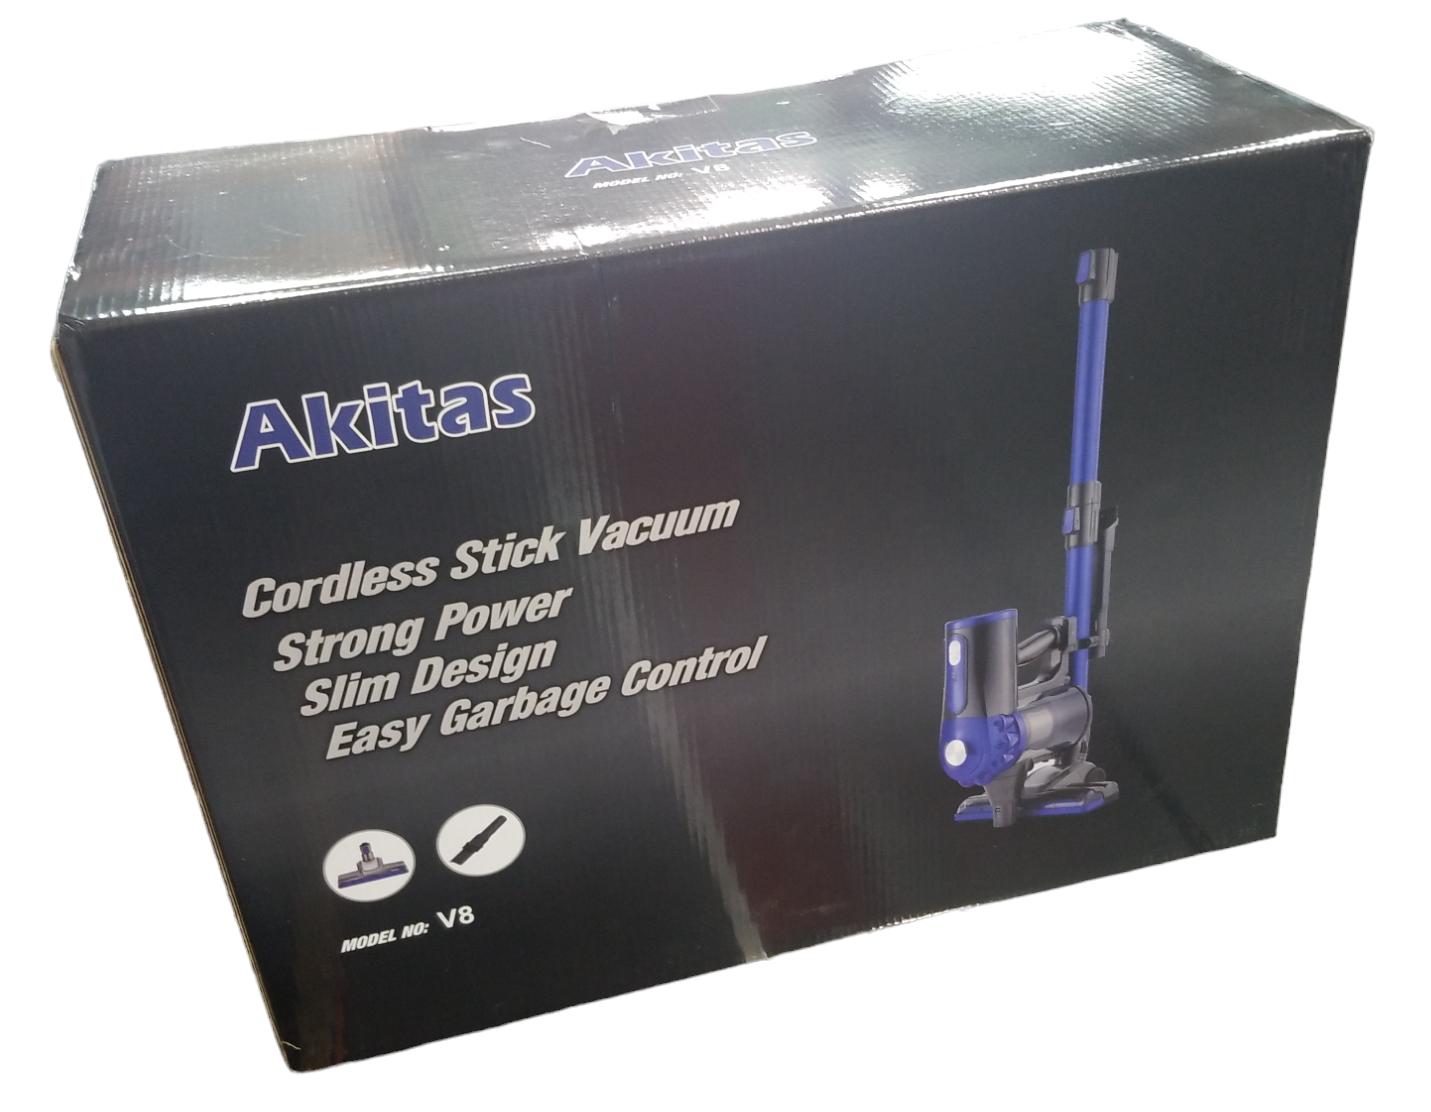 Akitas - Cordless Stick Vacuum - V8 Model - Boxed